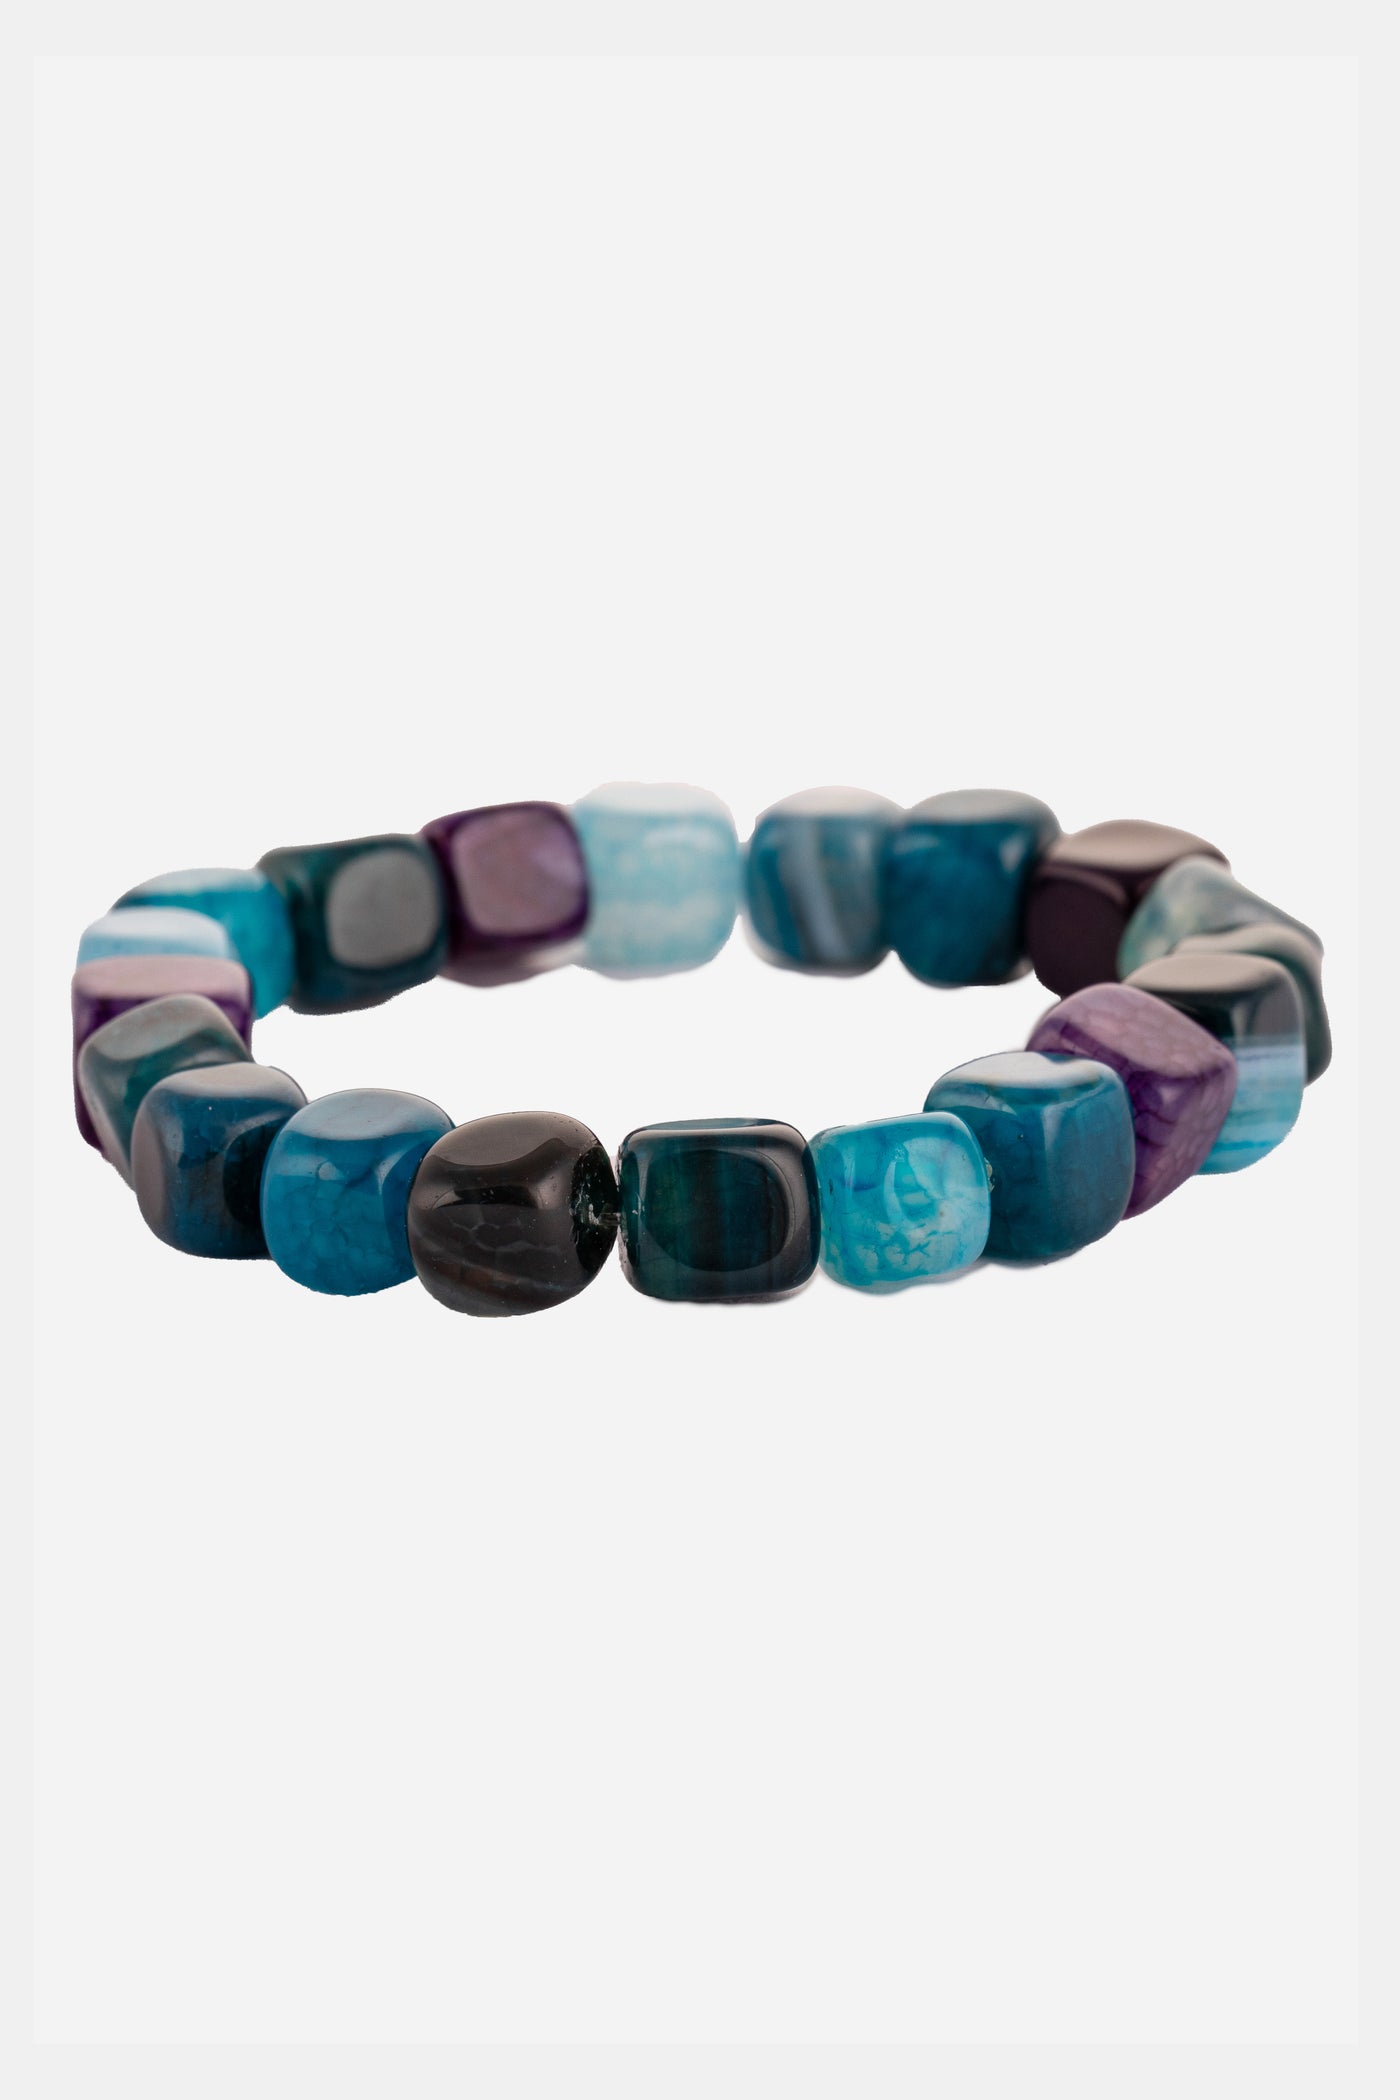 aqua blue stones beaded bracelet